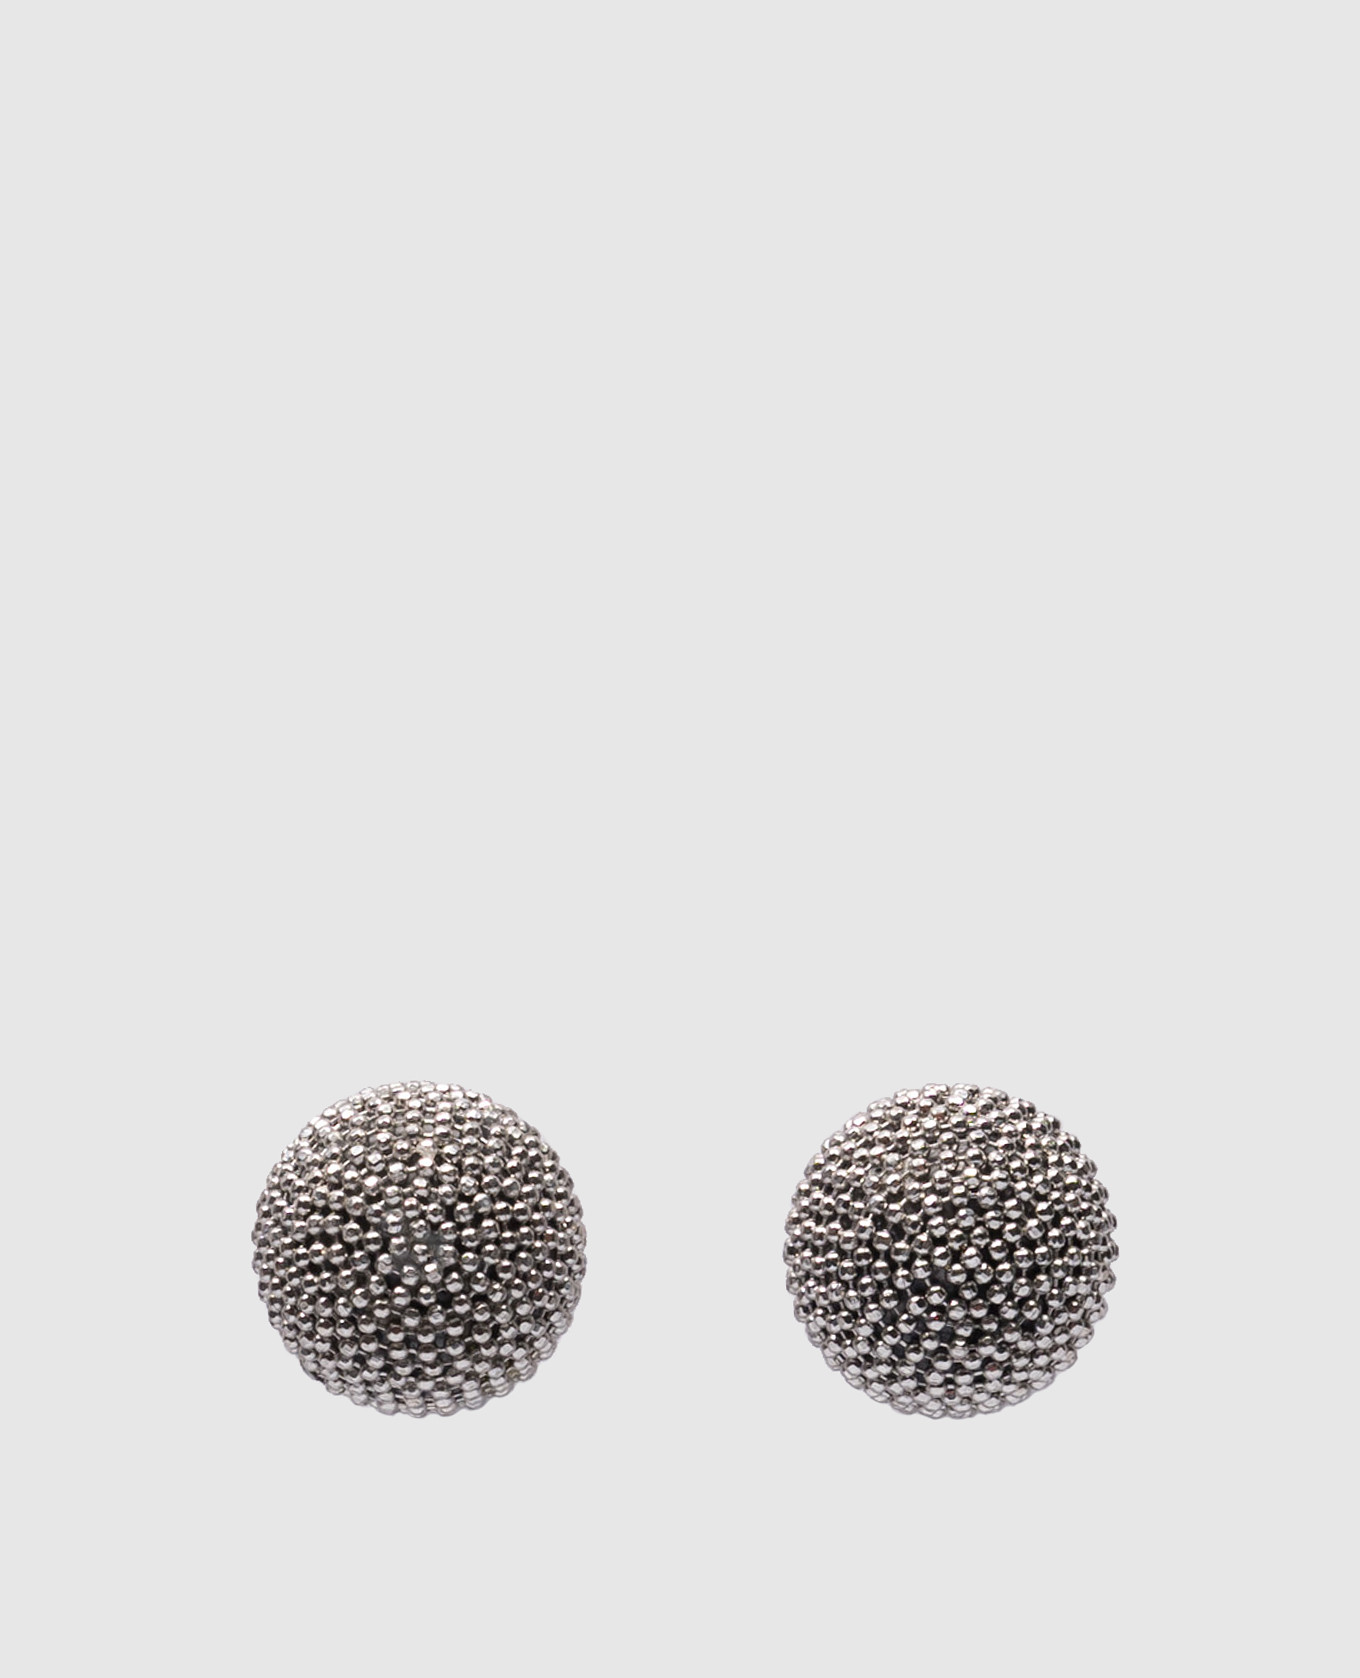 Silver earrings with a monil chain